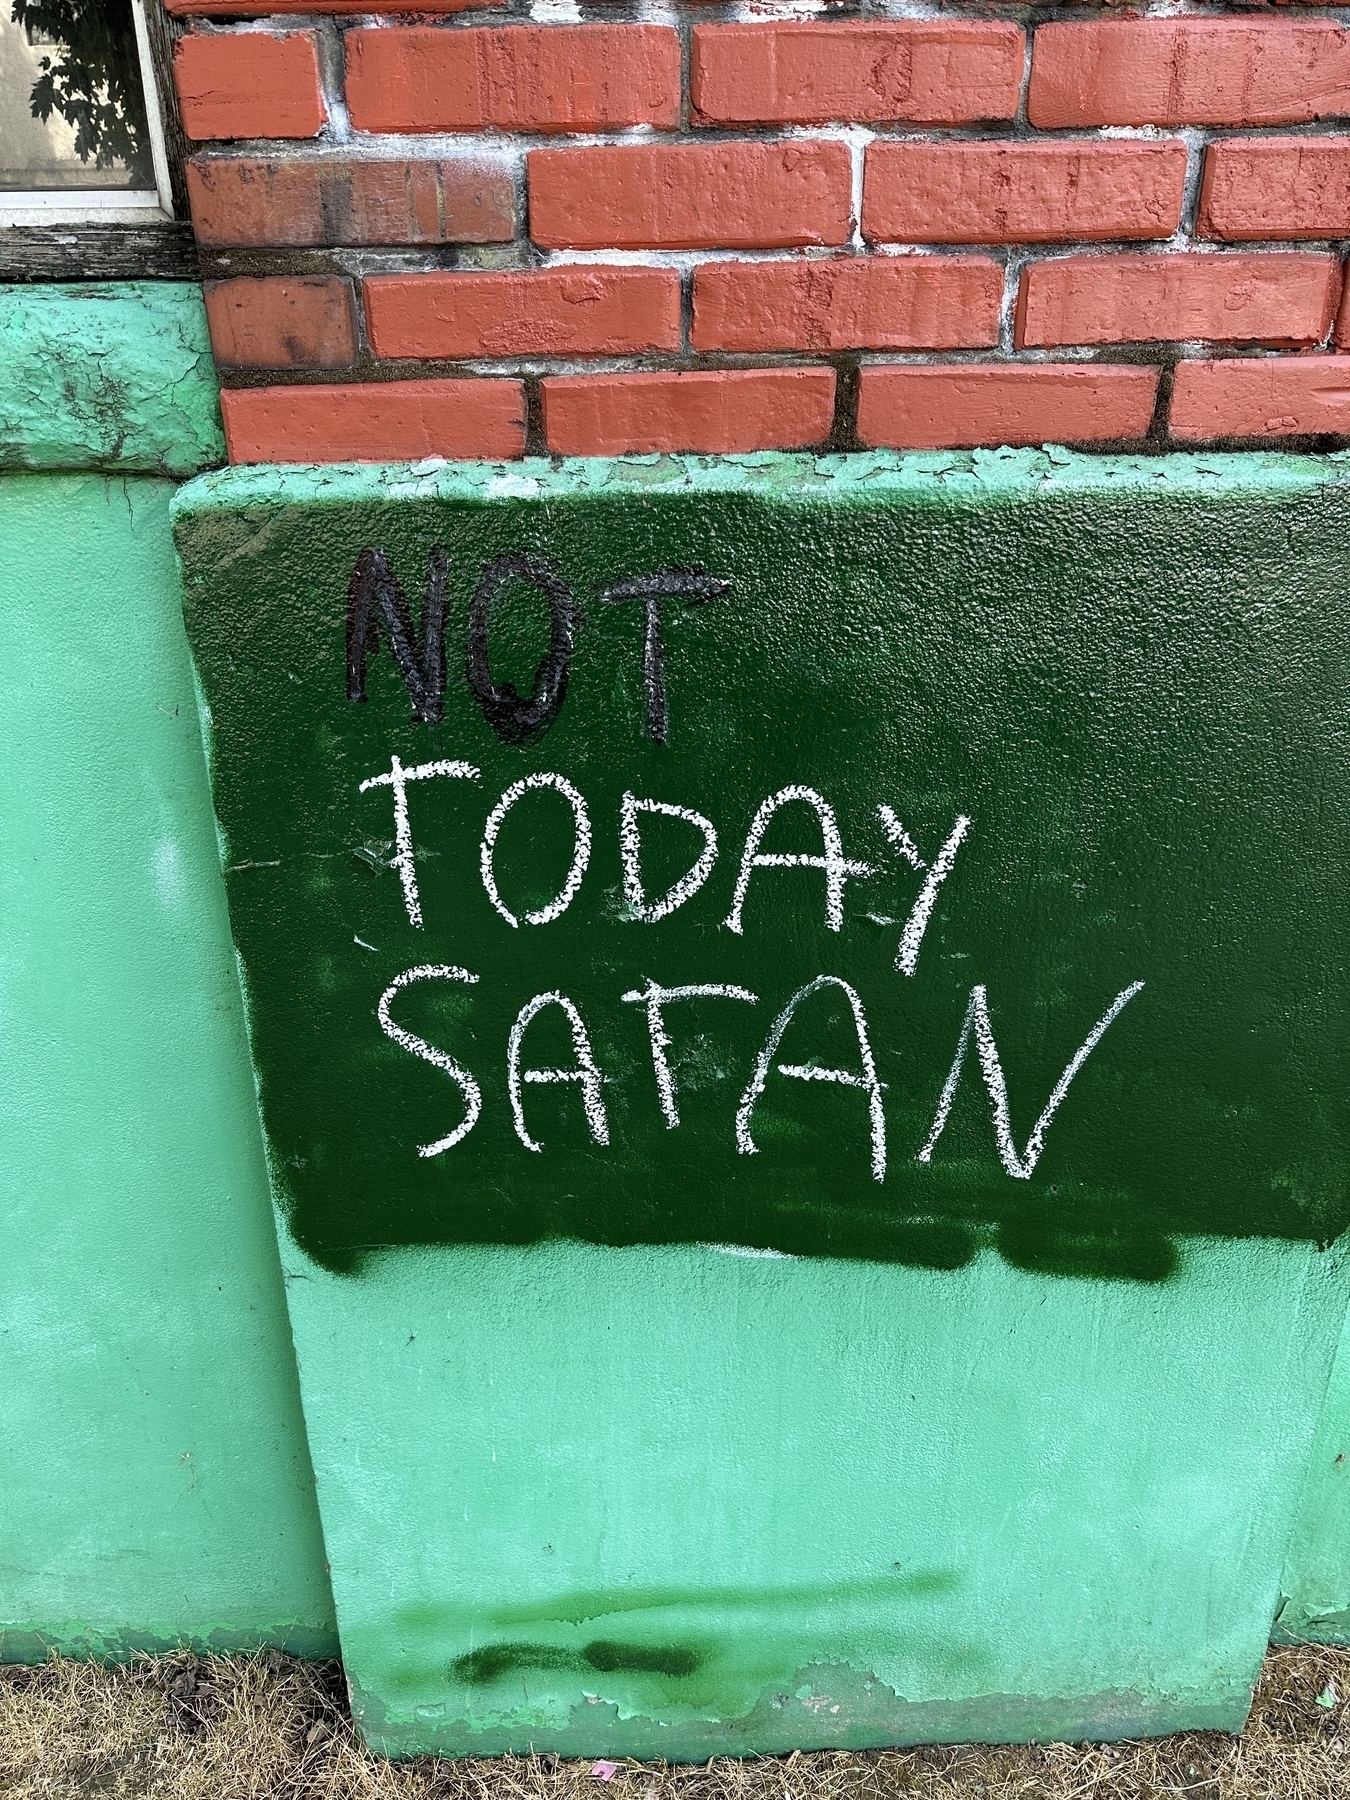 Graffiti on building “Not Today Satan”